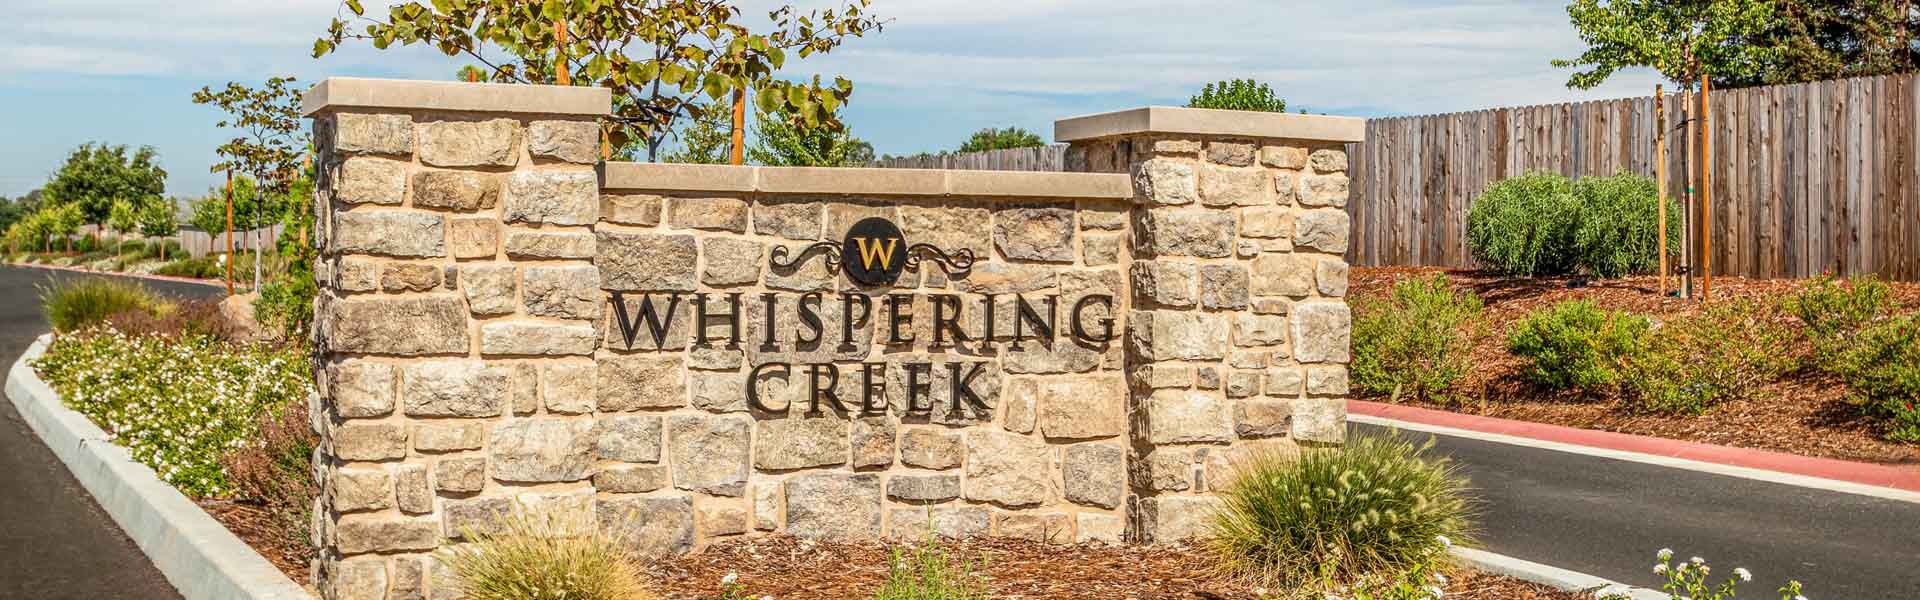 Whispering Creek